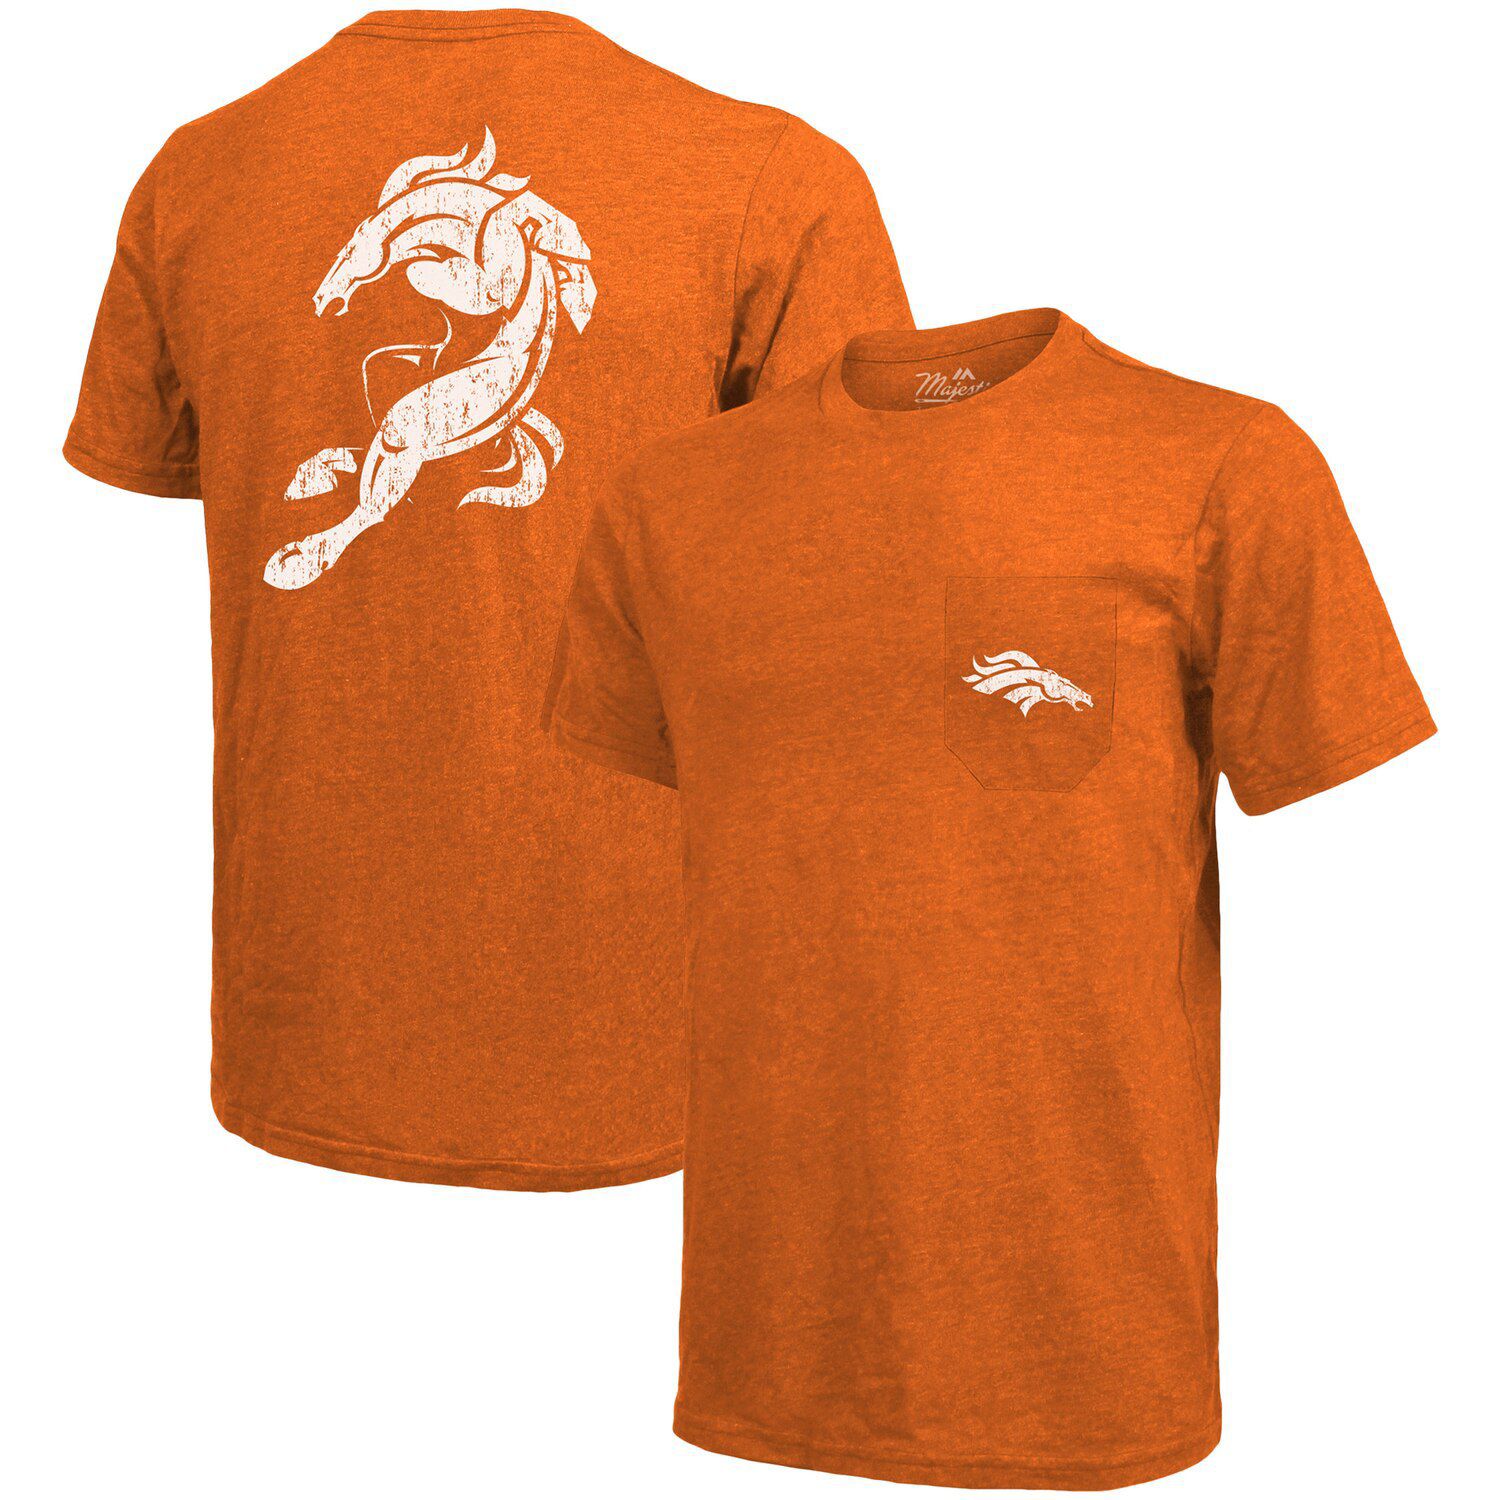 Футболка с карманами Tri-Blend Denver Broncos Majestic Threads - оранжевый футболка с карманами tri blend arizona cardinals threads cardinal majestic